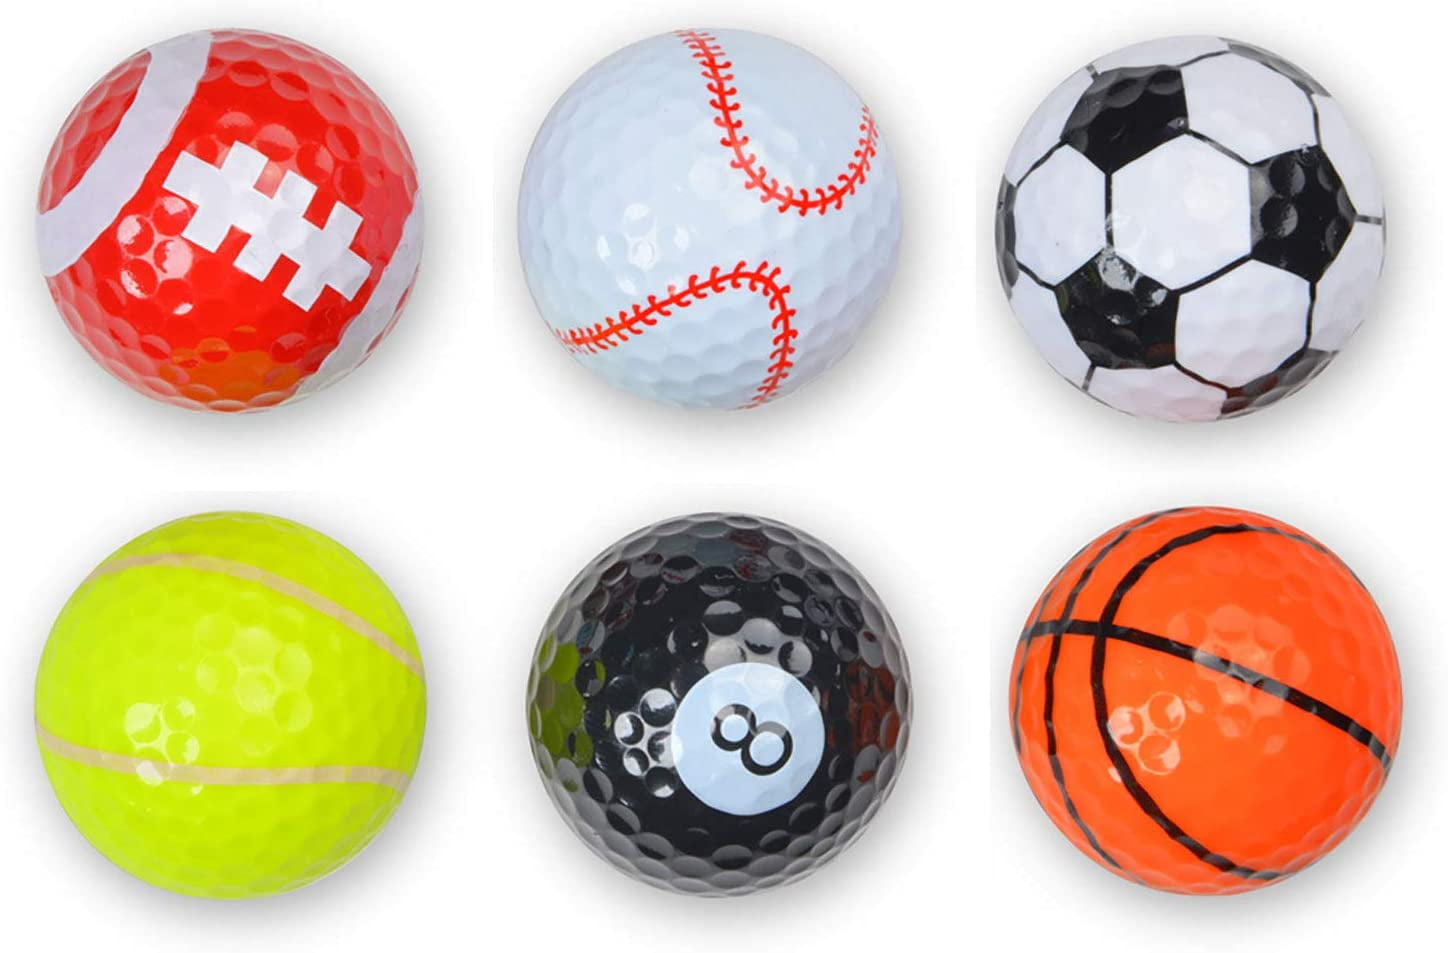 Funny Golf Balls Assorted Novelty Golf Training Balls, Birthday